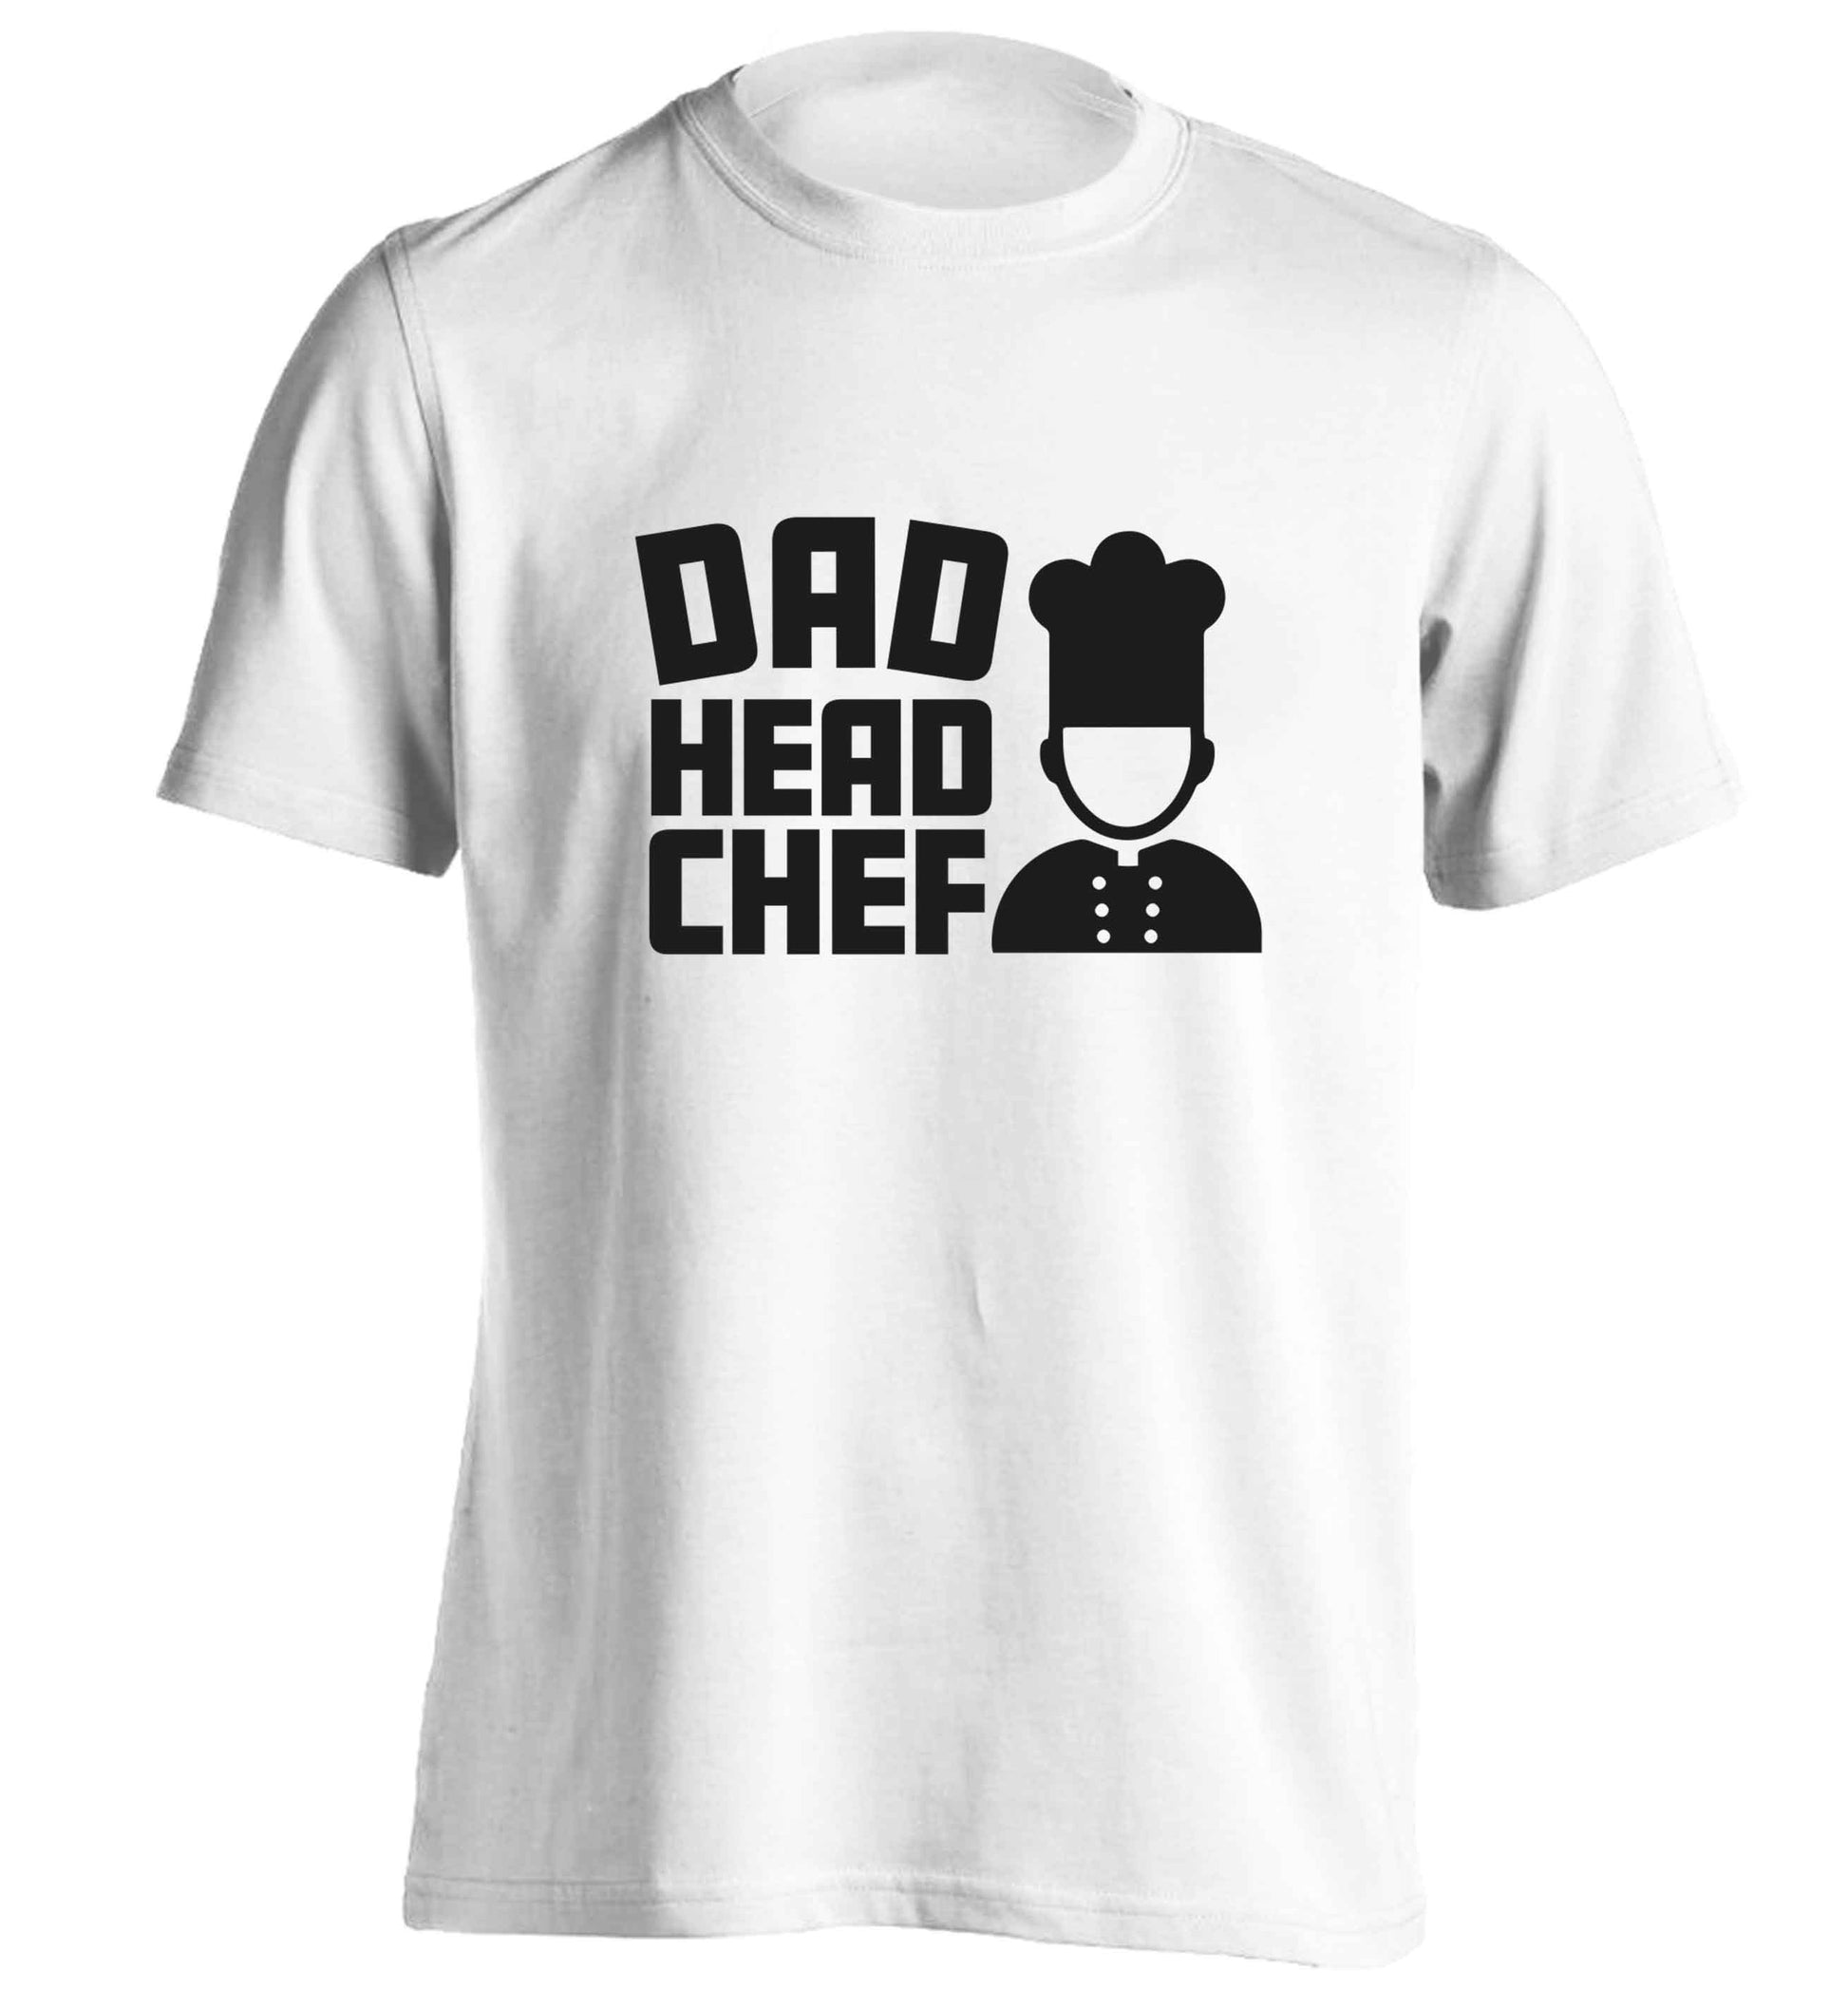 Dad head chef adults unisex white Tshirt 2XL